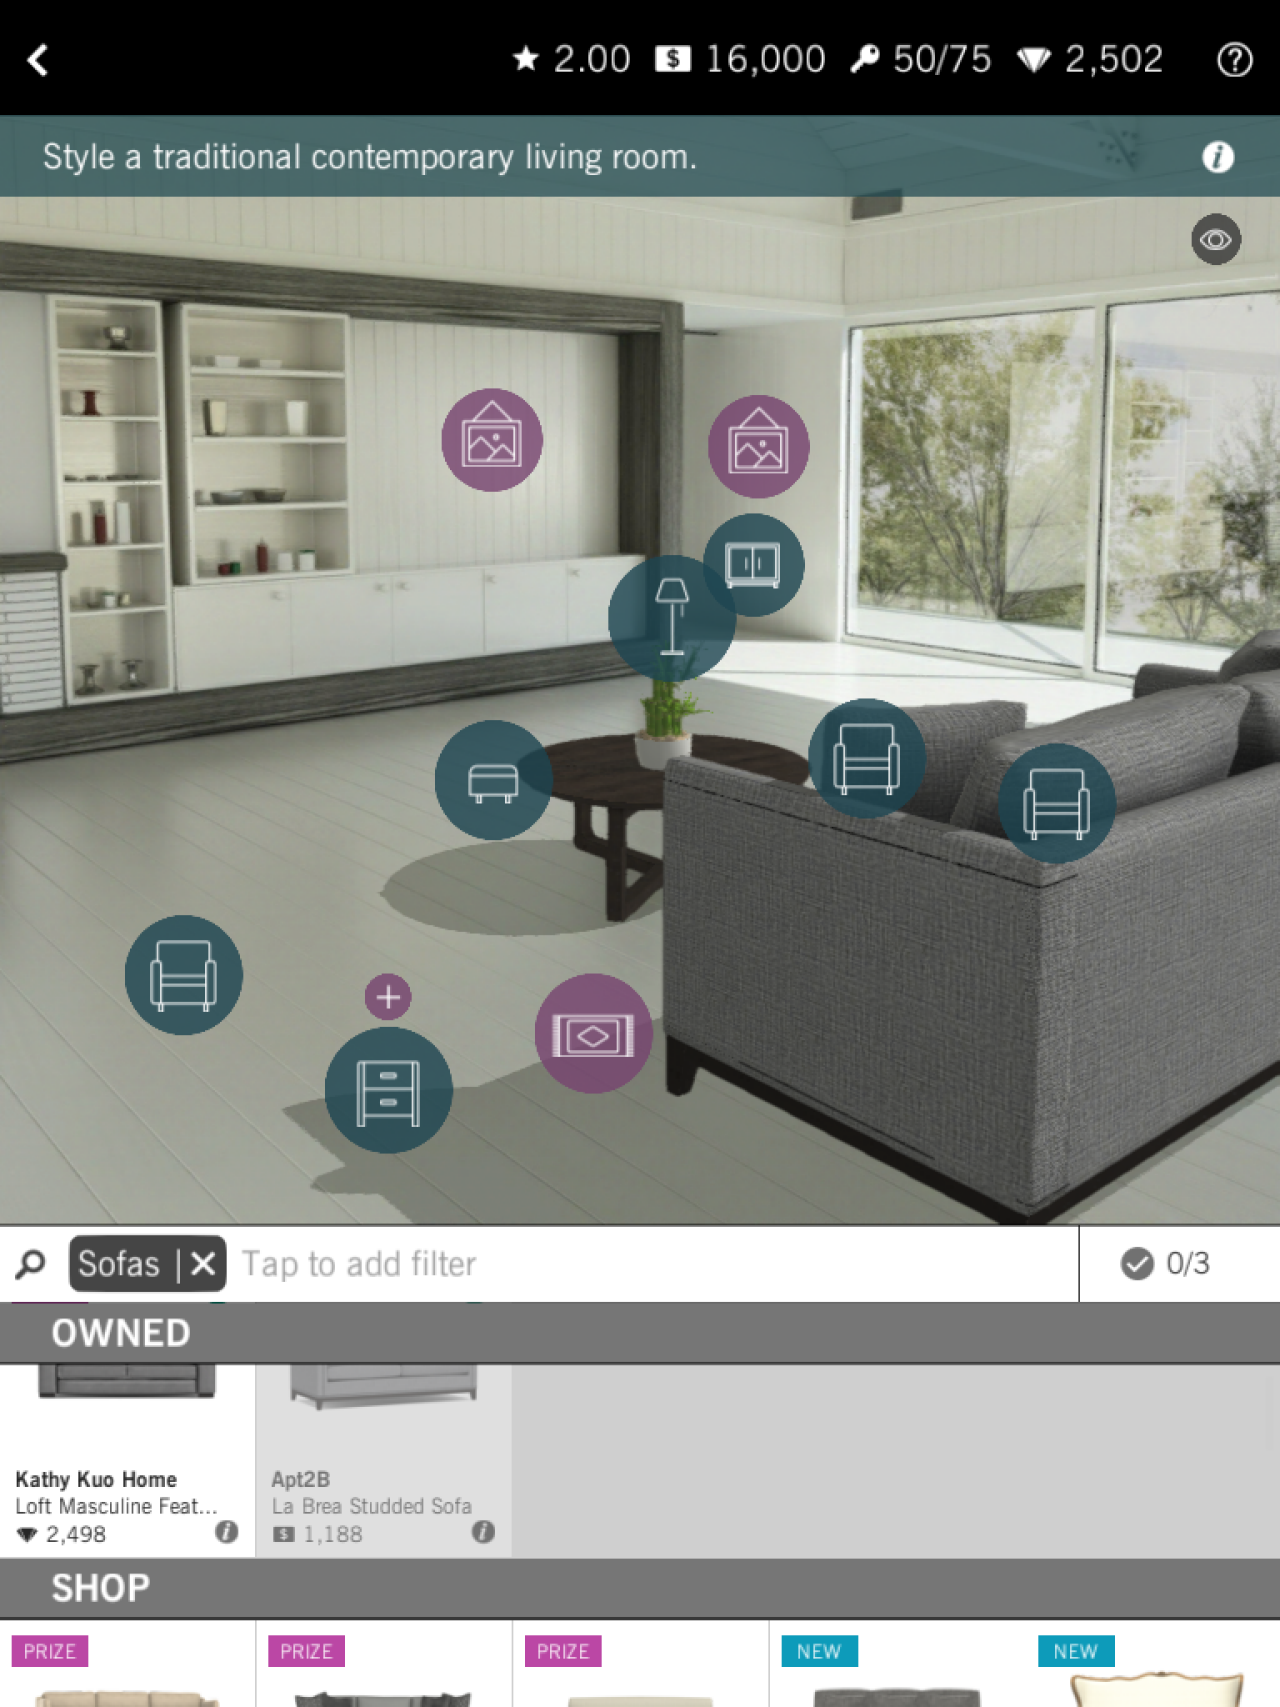 Be an Interior Designer With Design Home App   HGTV's Decorating ...